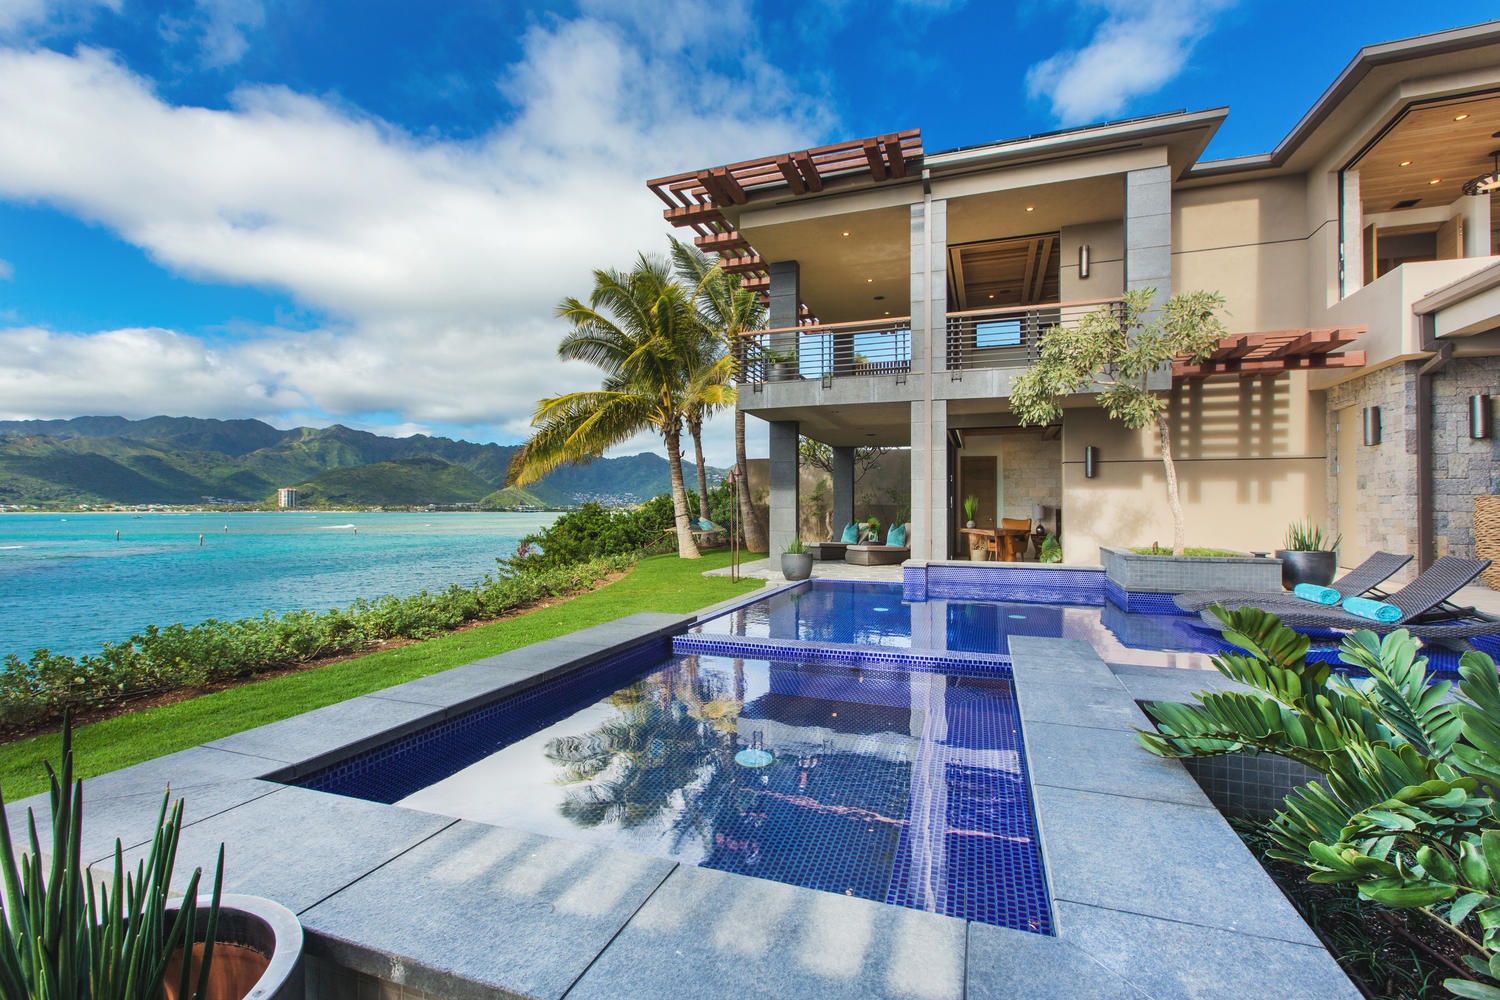 Honolulu Vacation Rentals, Ocean House - Infinity pool and jacuzzi.